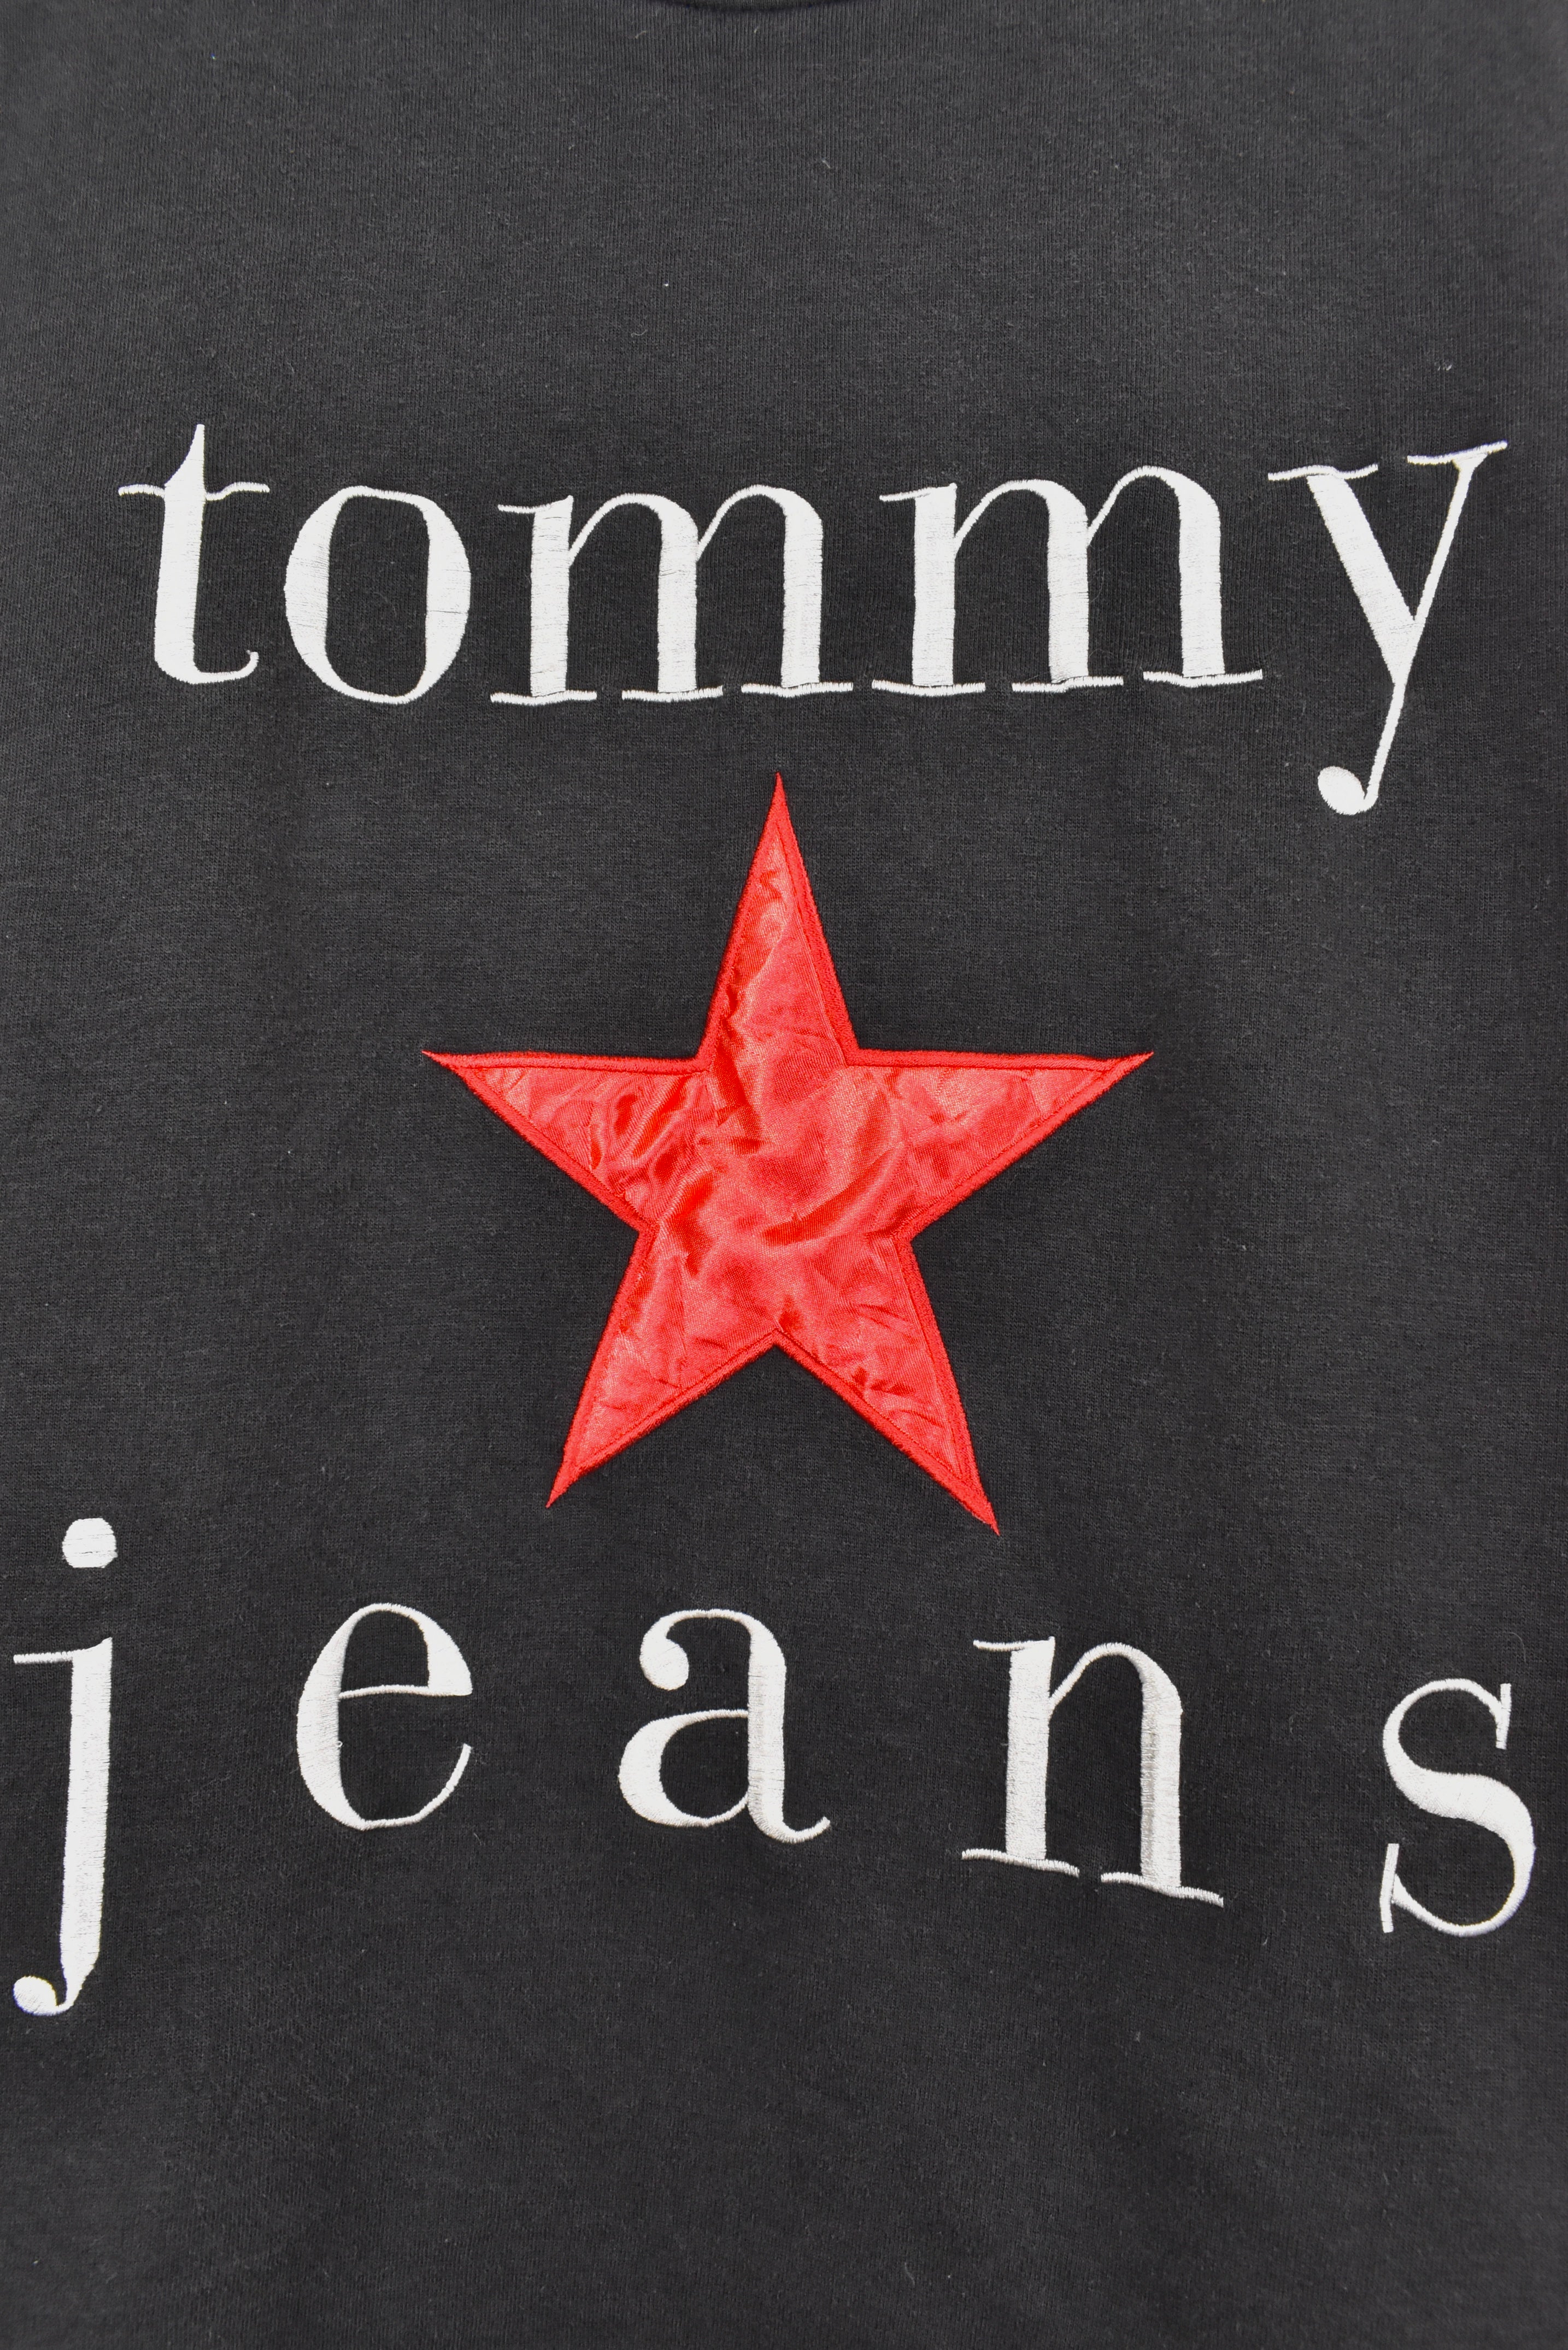 Vintage Tommy Hilfiger sweatshirt, black embroidered crewneck - AU XL TOMMY HILFIGER